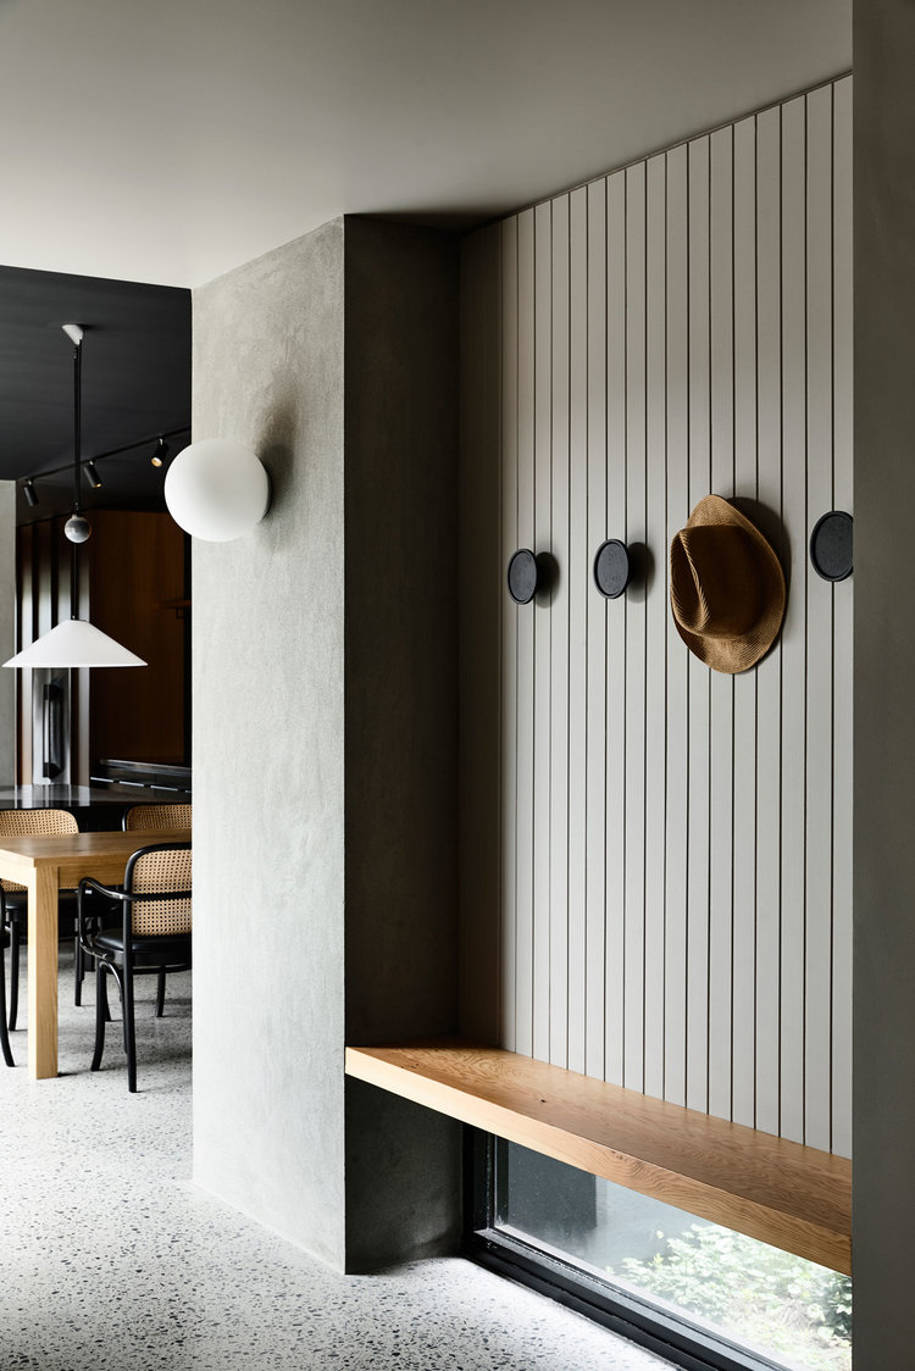 Archisearch Oak Tree House by Kennedy Nolan won the Residential Award at 2019 Australia Interior Design Awards